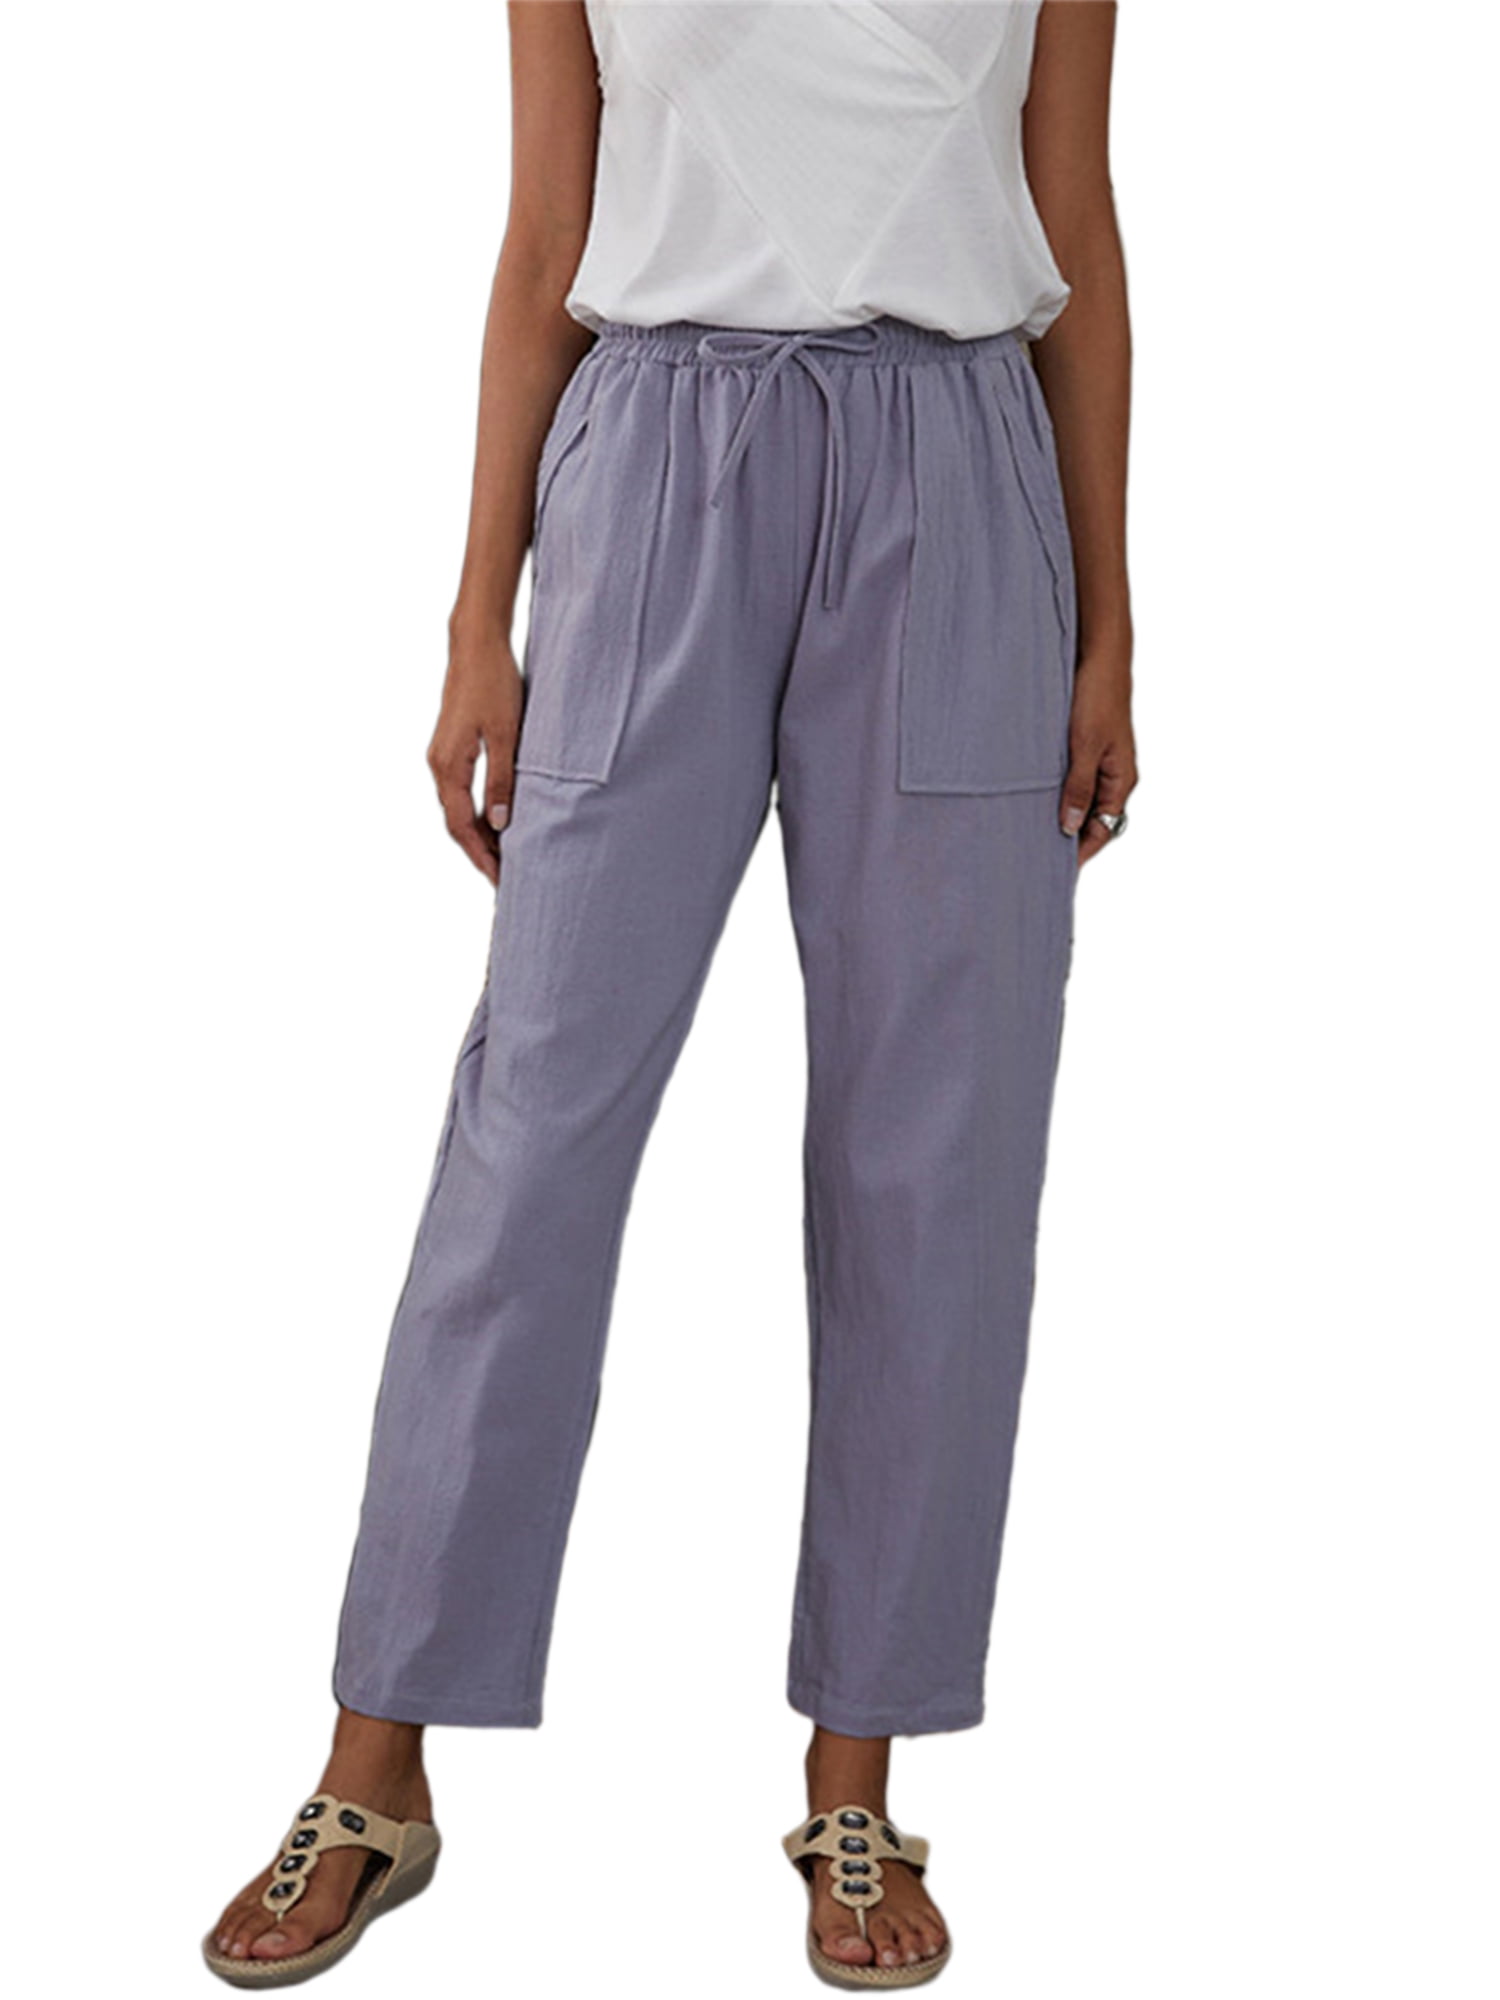 UKAP - Women's Casual Pocket Lounge Trousers Cotton and linen Elastic ...